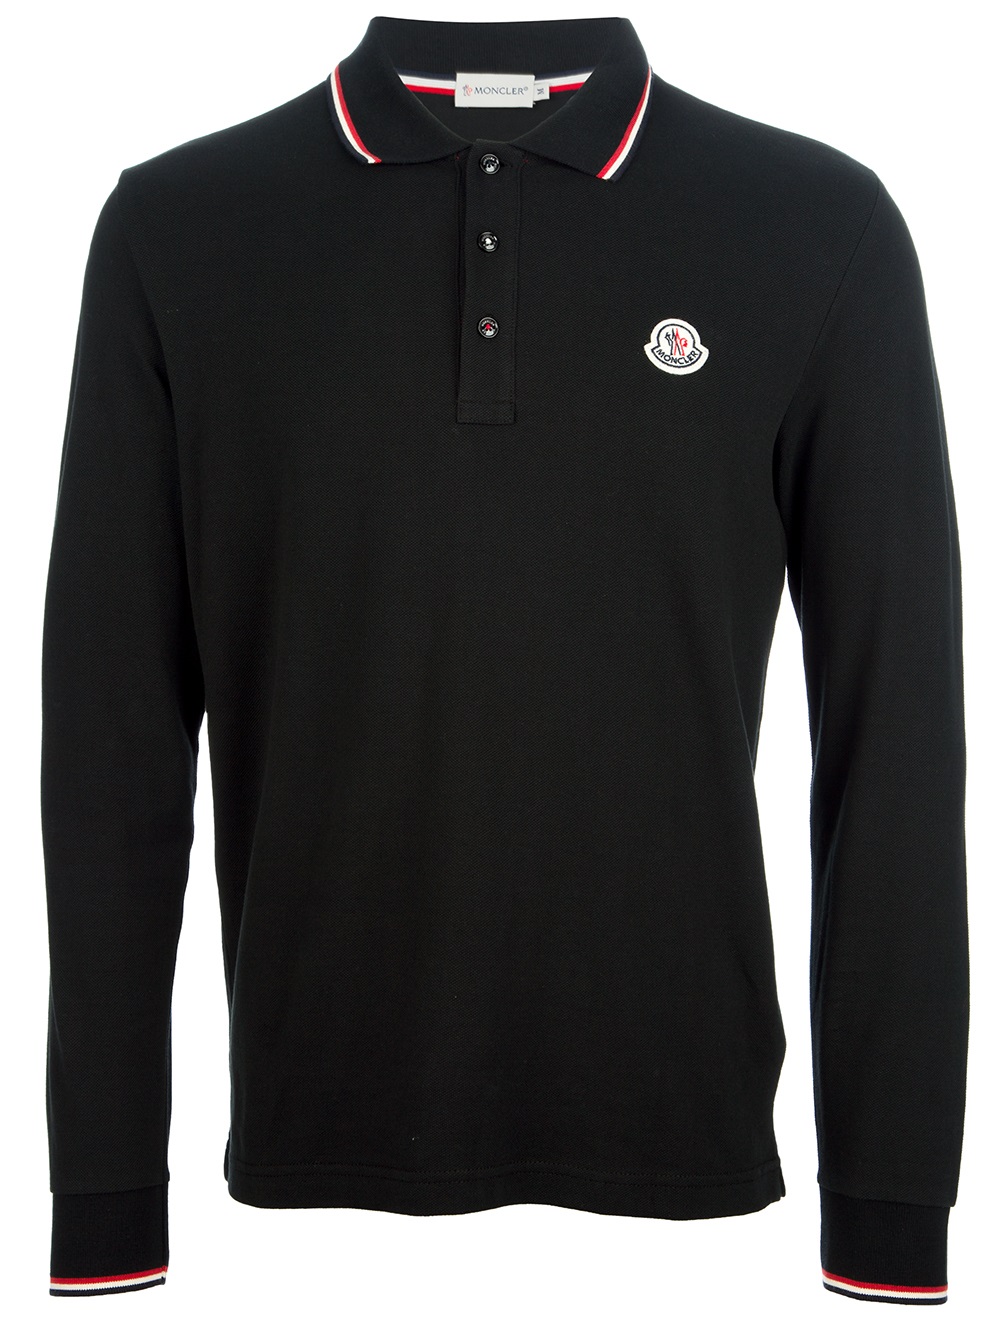 Moncler Long Sleeve Polo Shirt in Black for Men - Lyst